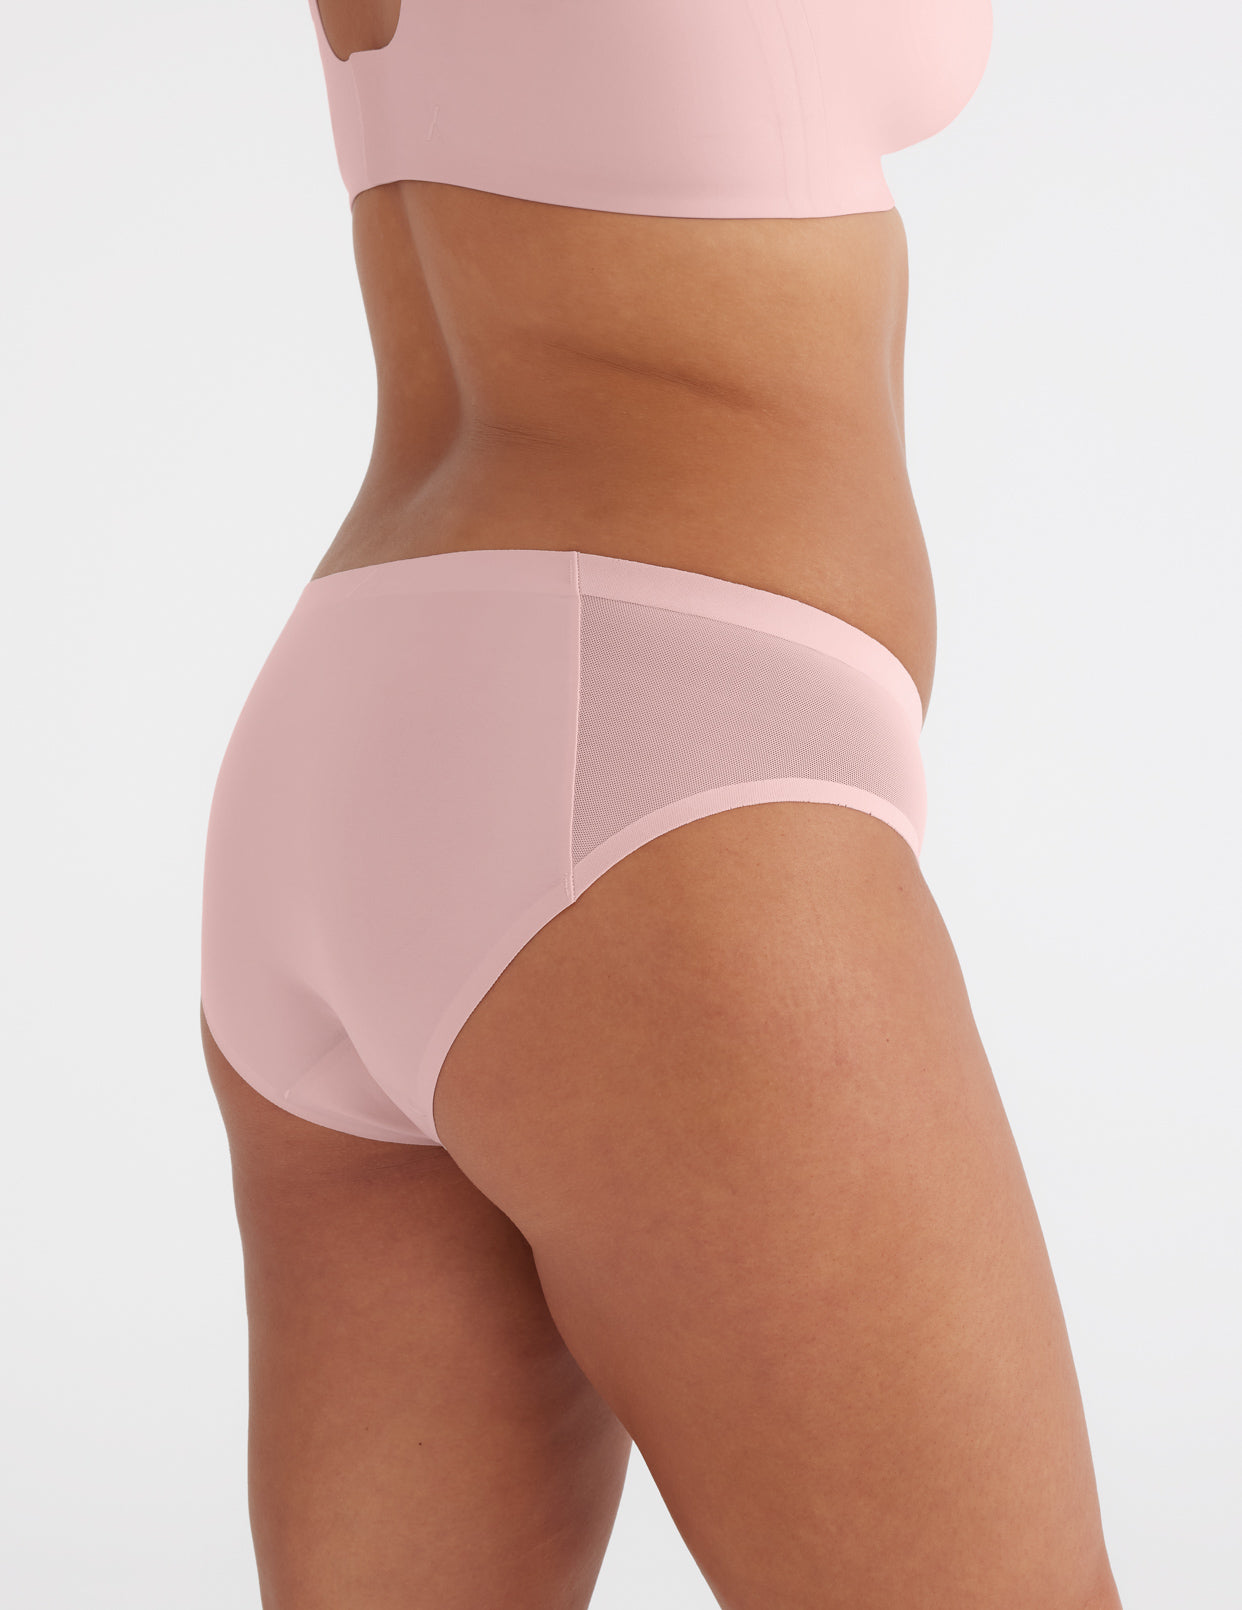 Knosfe Cheeky Underwear for Women Menstrual Period Leak Proof Solid Low  Rise Womens Underwear Briefs Pink M